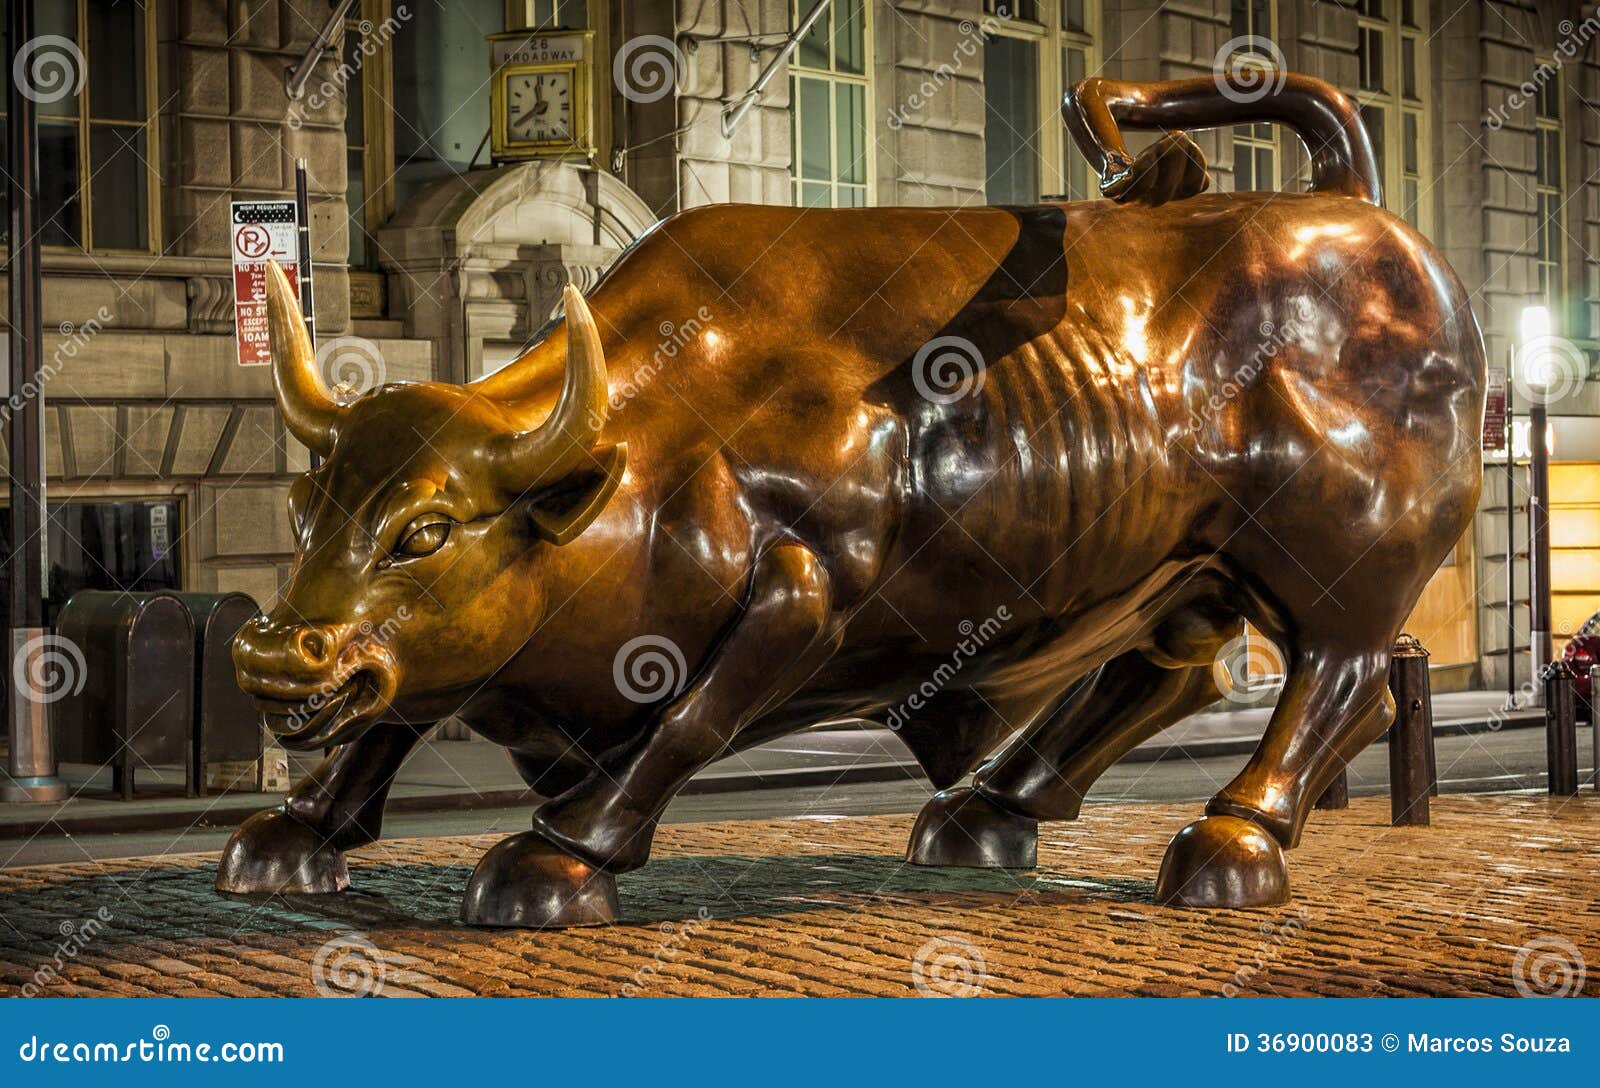 Wall Street Bull Stock Photos - Image: 36900083